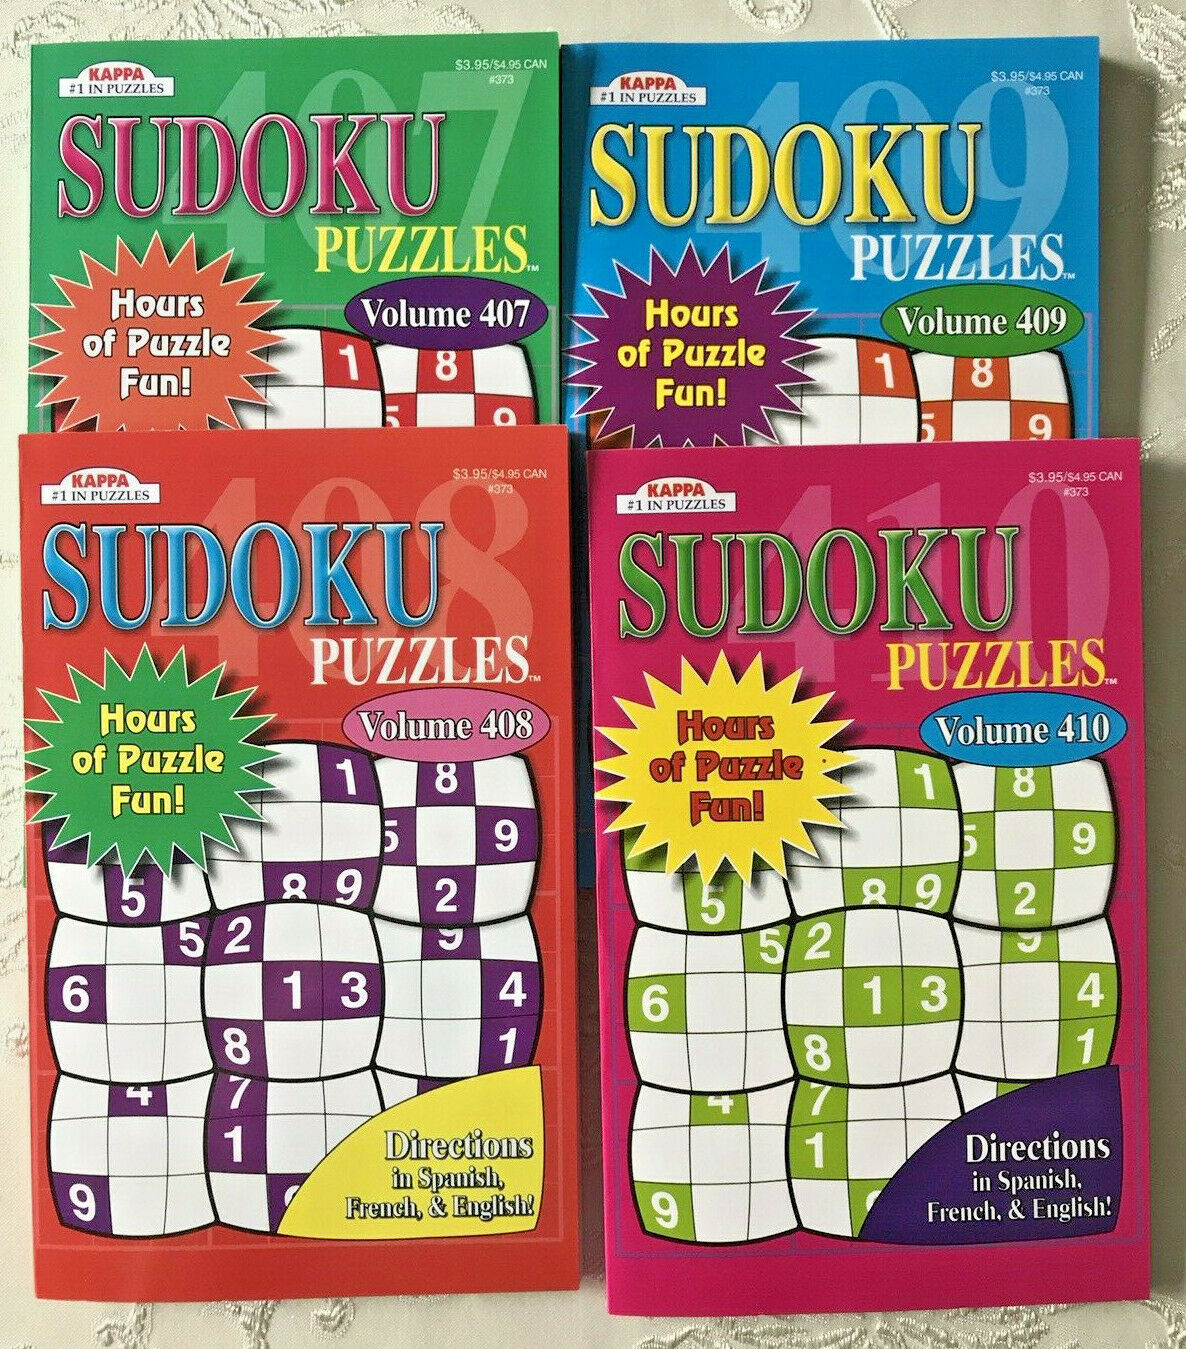 sudoku puzzle books